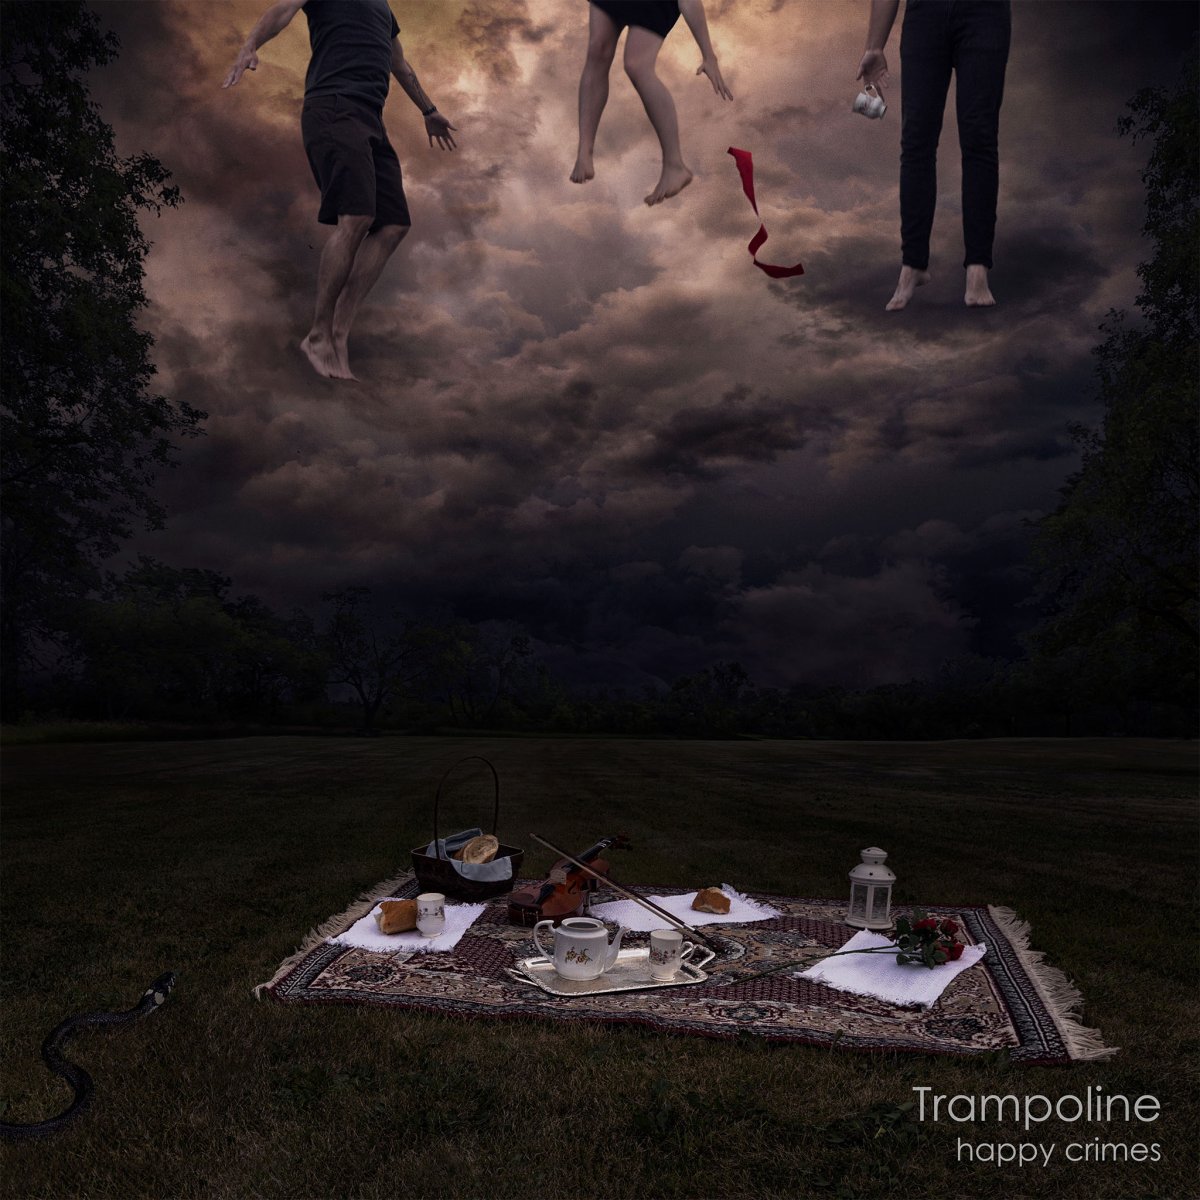 Trampoline’s “Happy Crimes” album release show - image